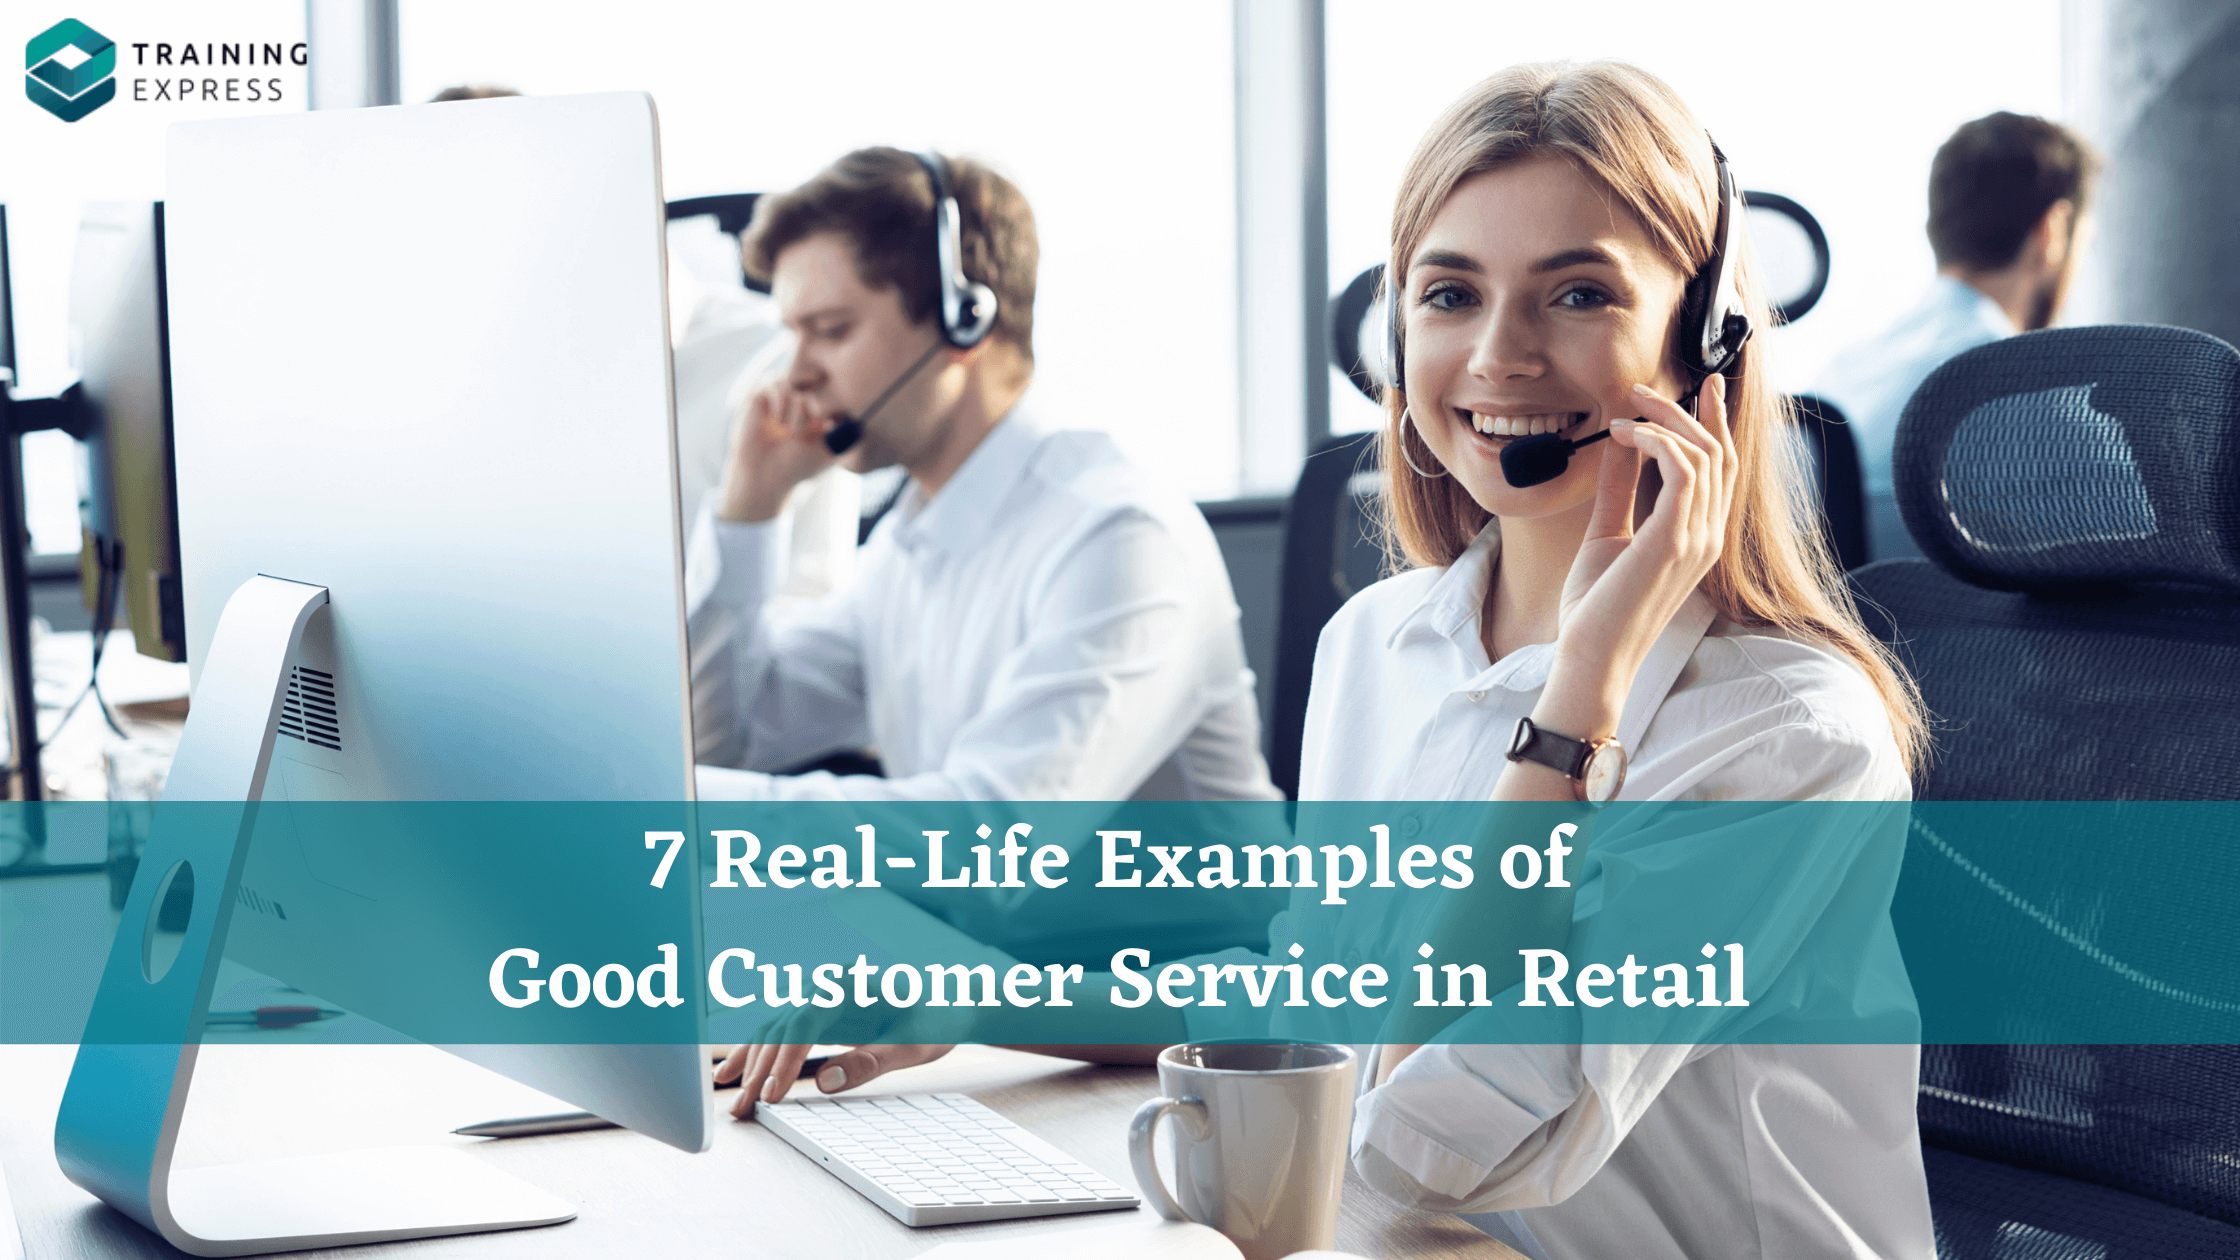 Good Customer Service in Retail